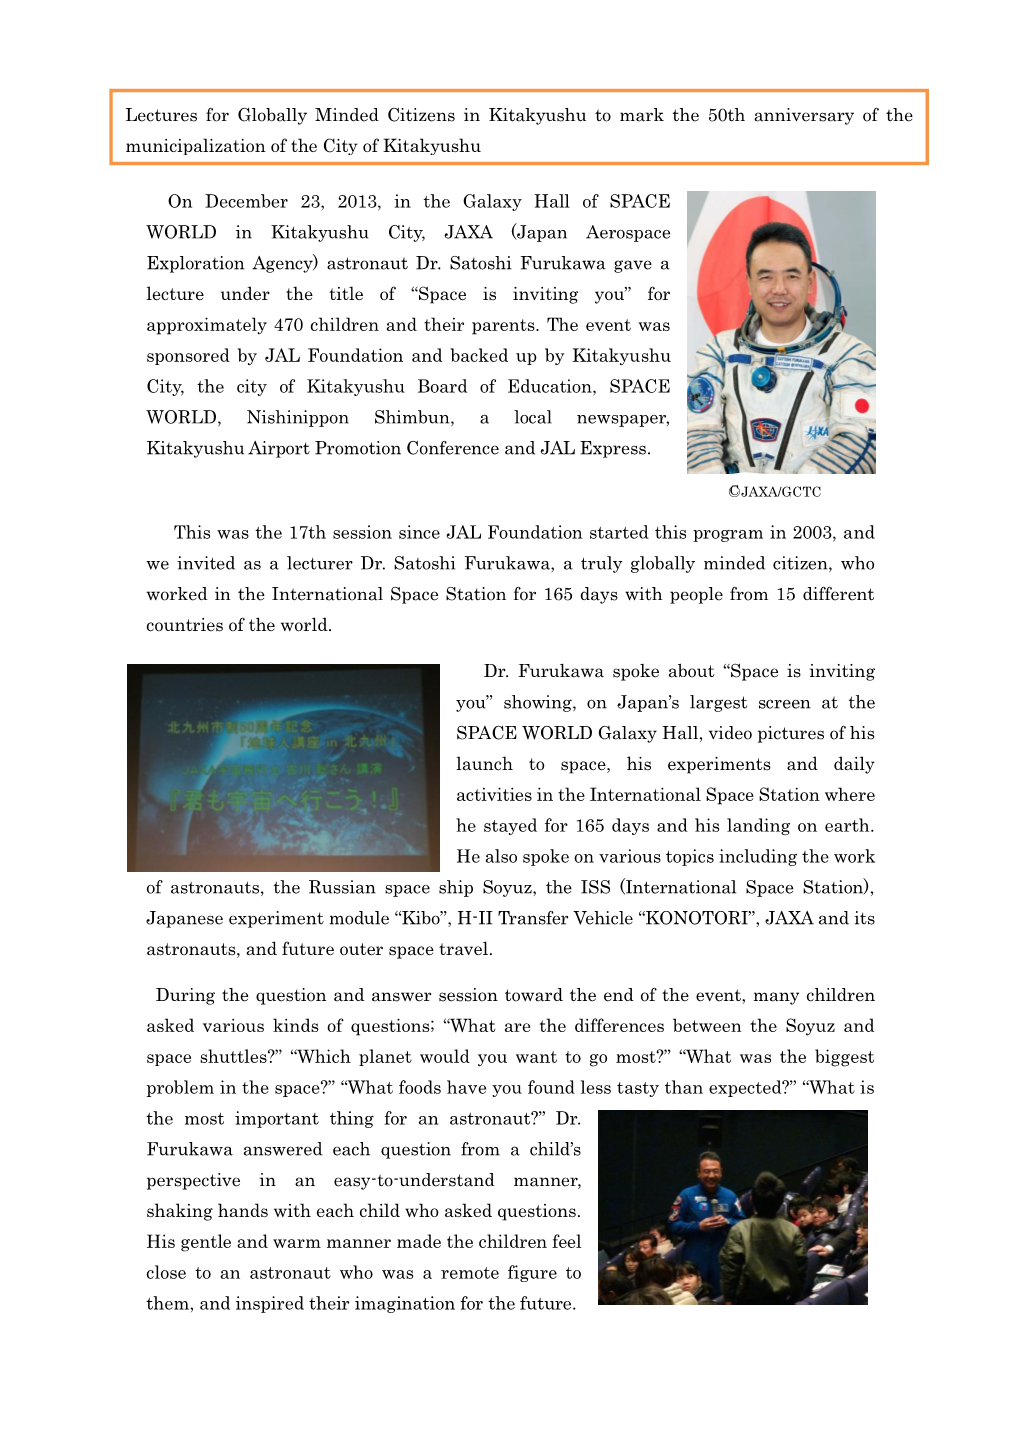 Japan Aerospace Exploration Agency) Astronaut Dr